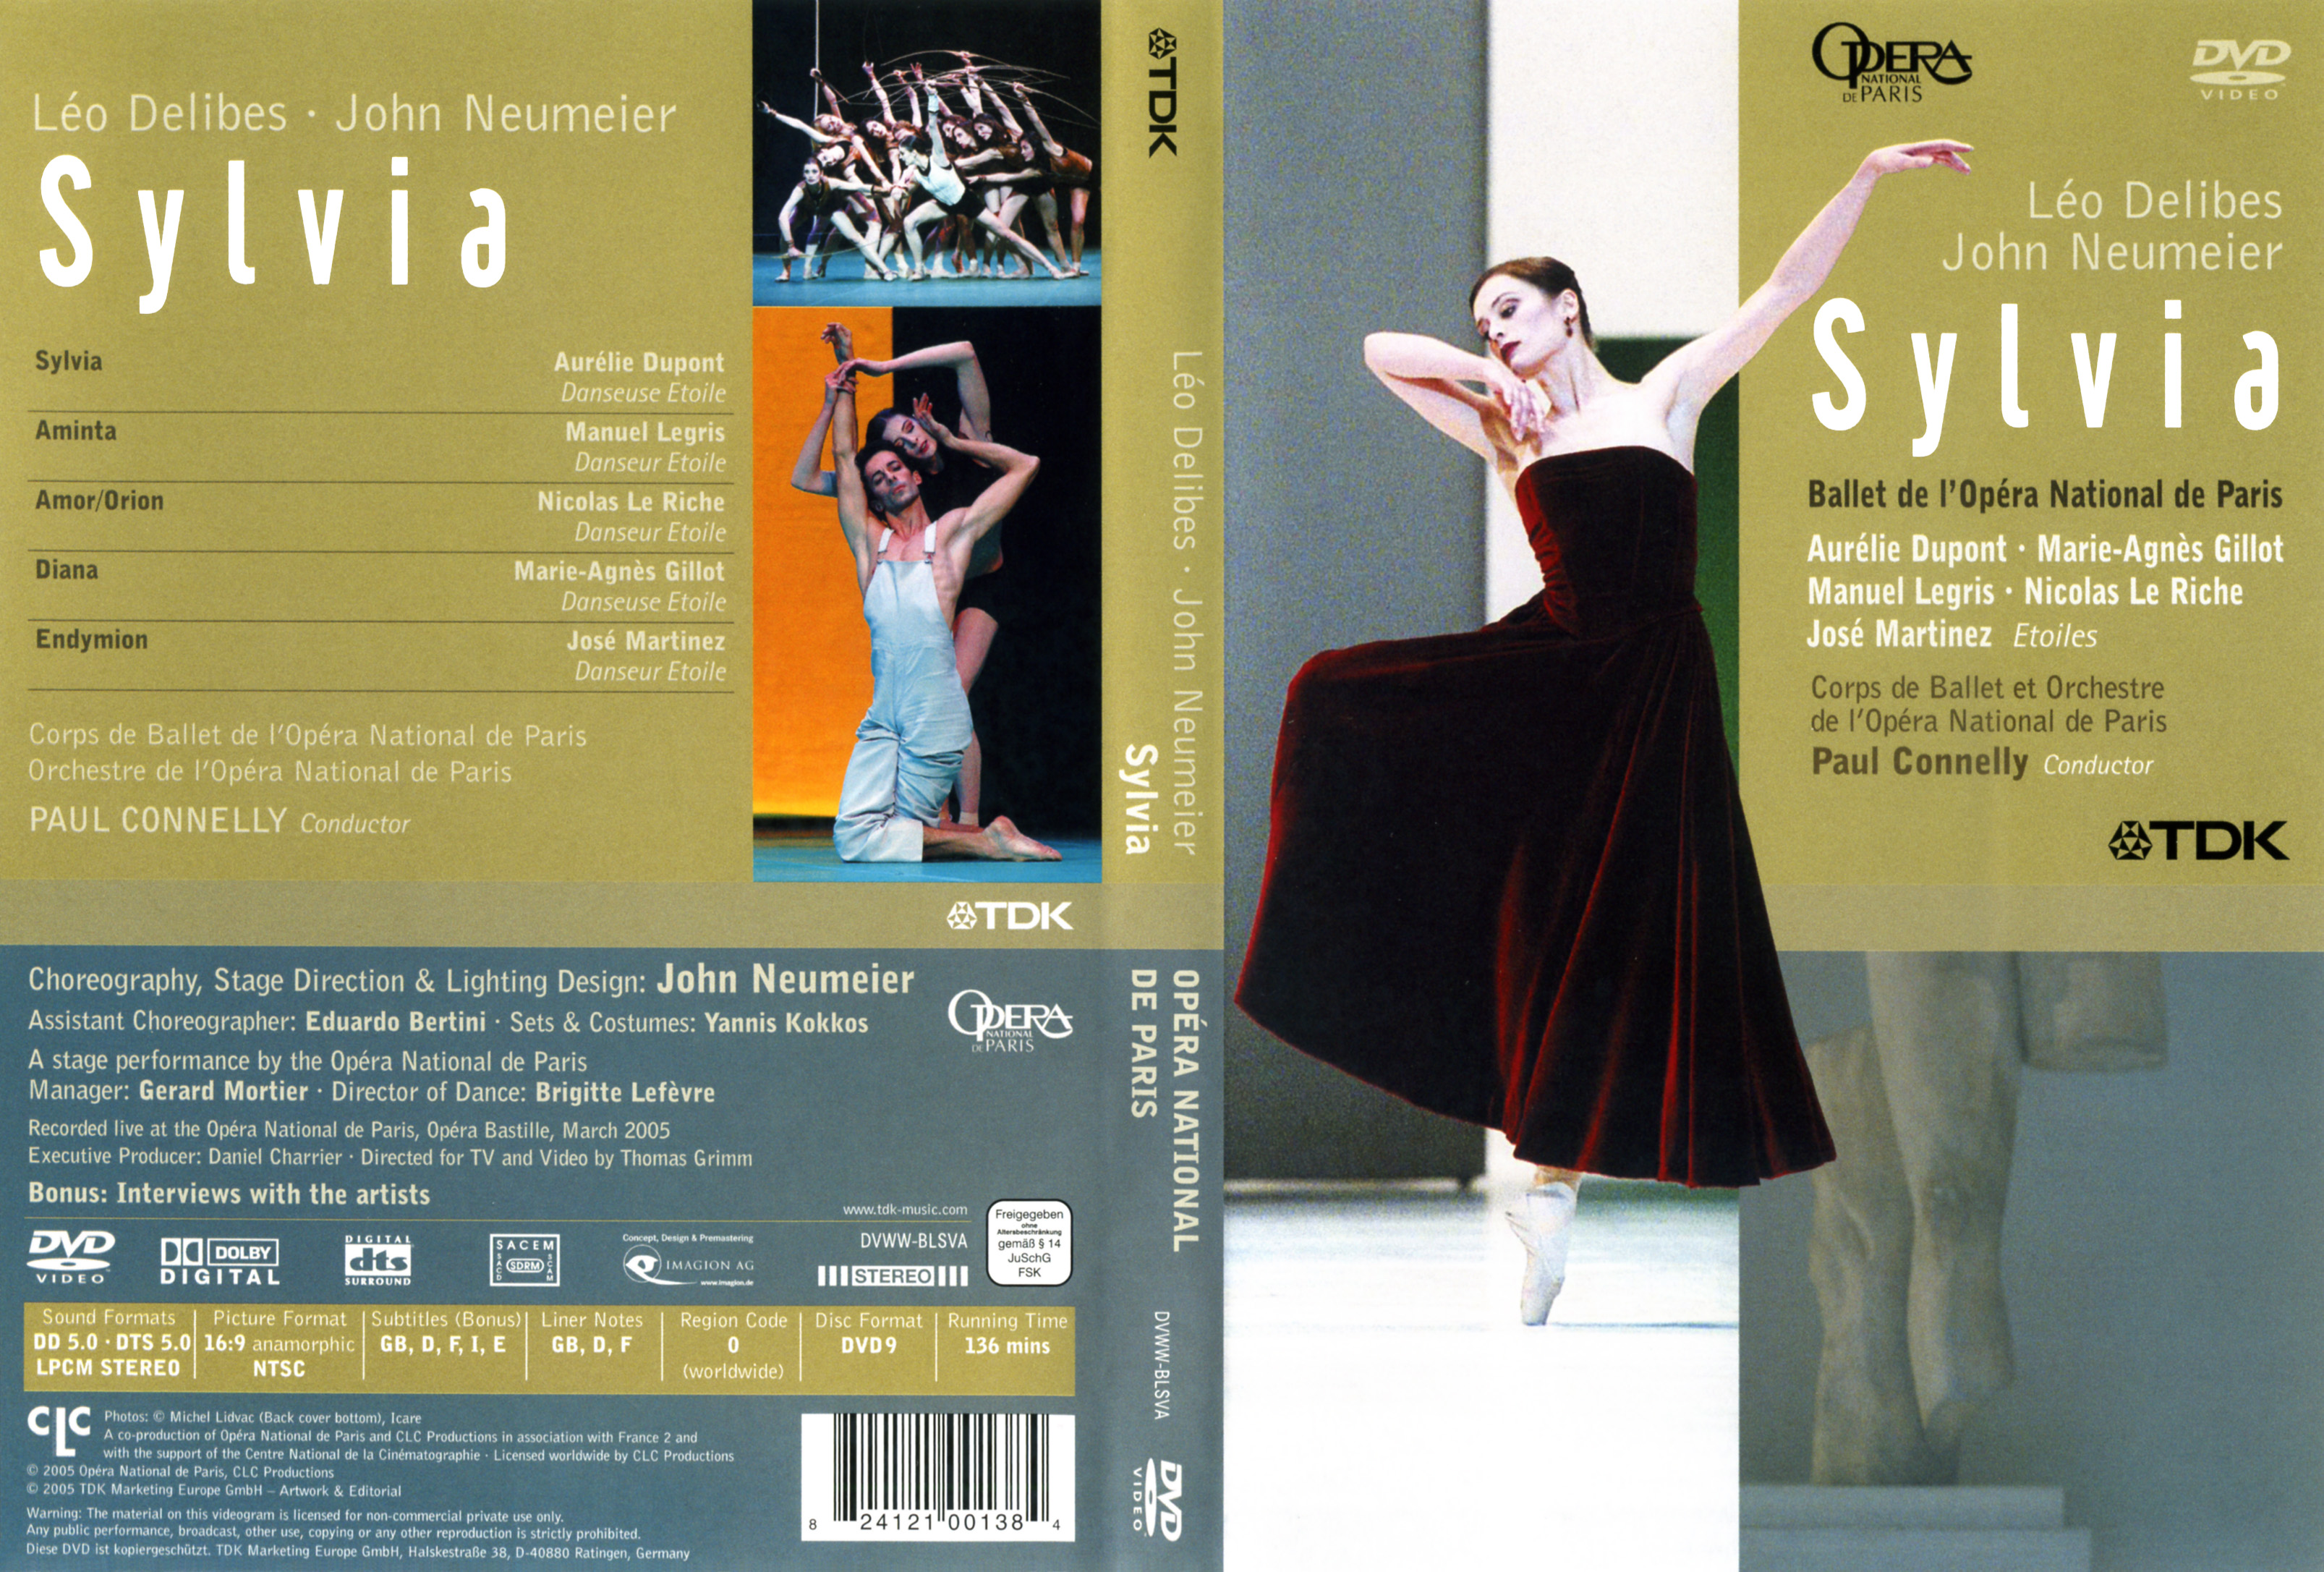 Jaquette DVD Sylvia